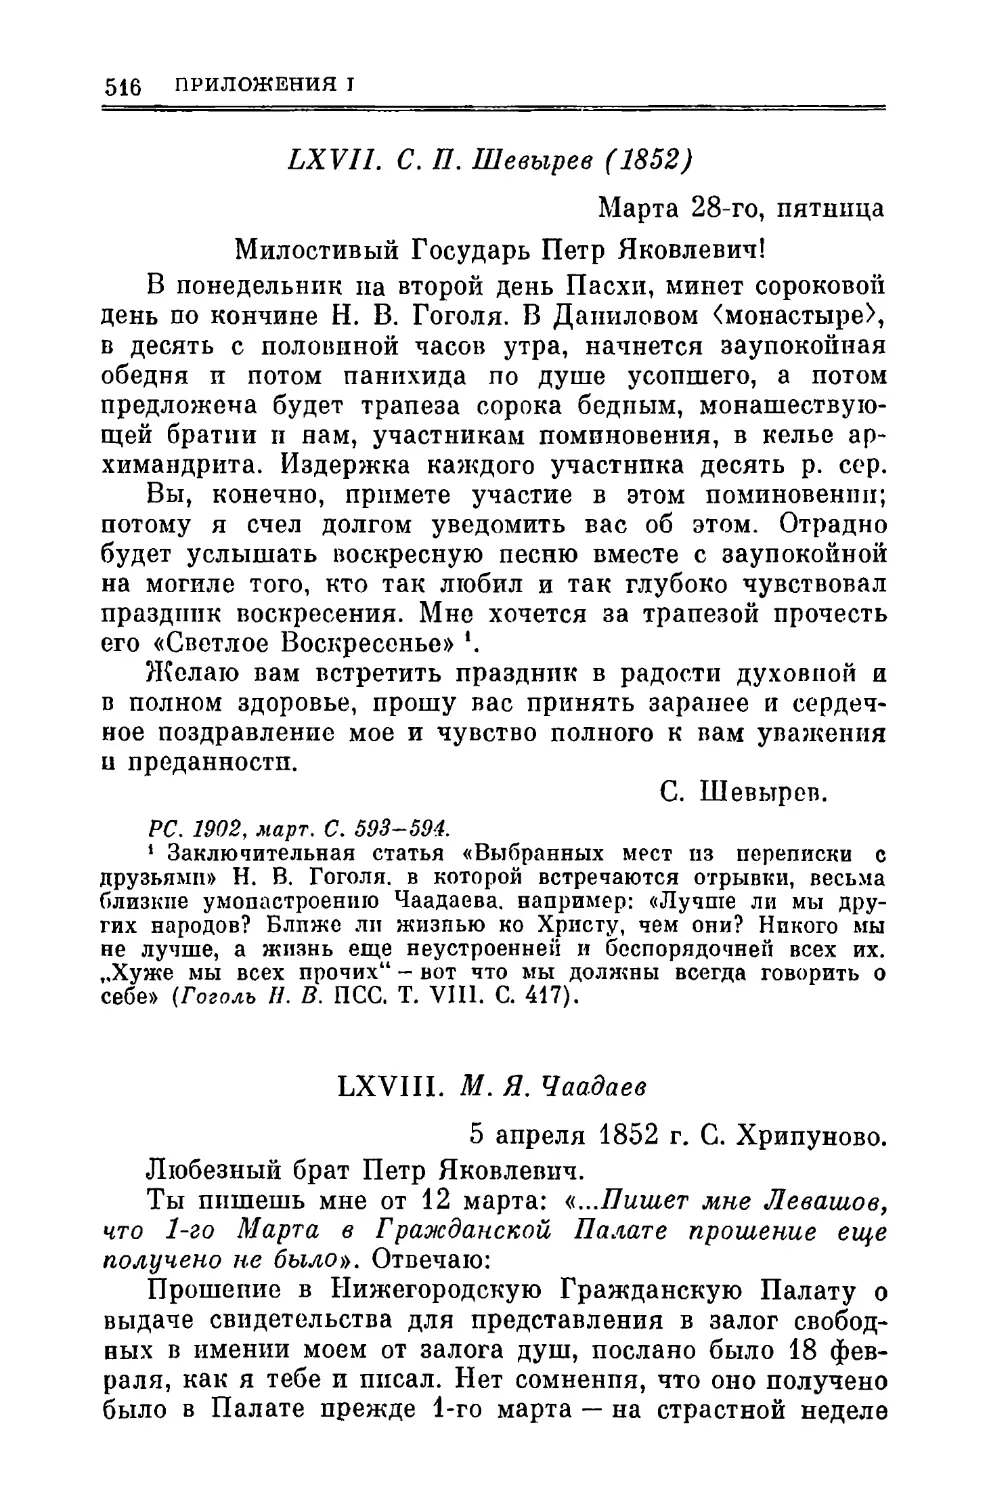 LXVII. Шевырев С.П. 28.ІІІ.1852
LXVIII. Чаадаев М.Я. 5.IV.1852